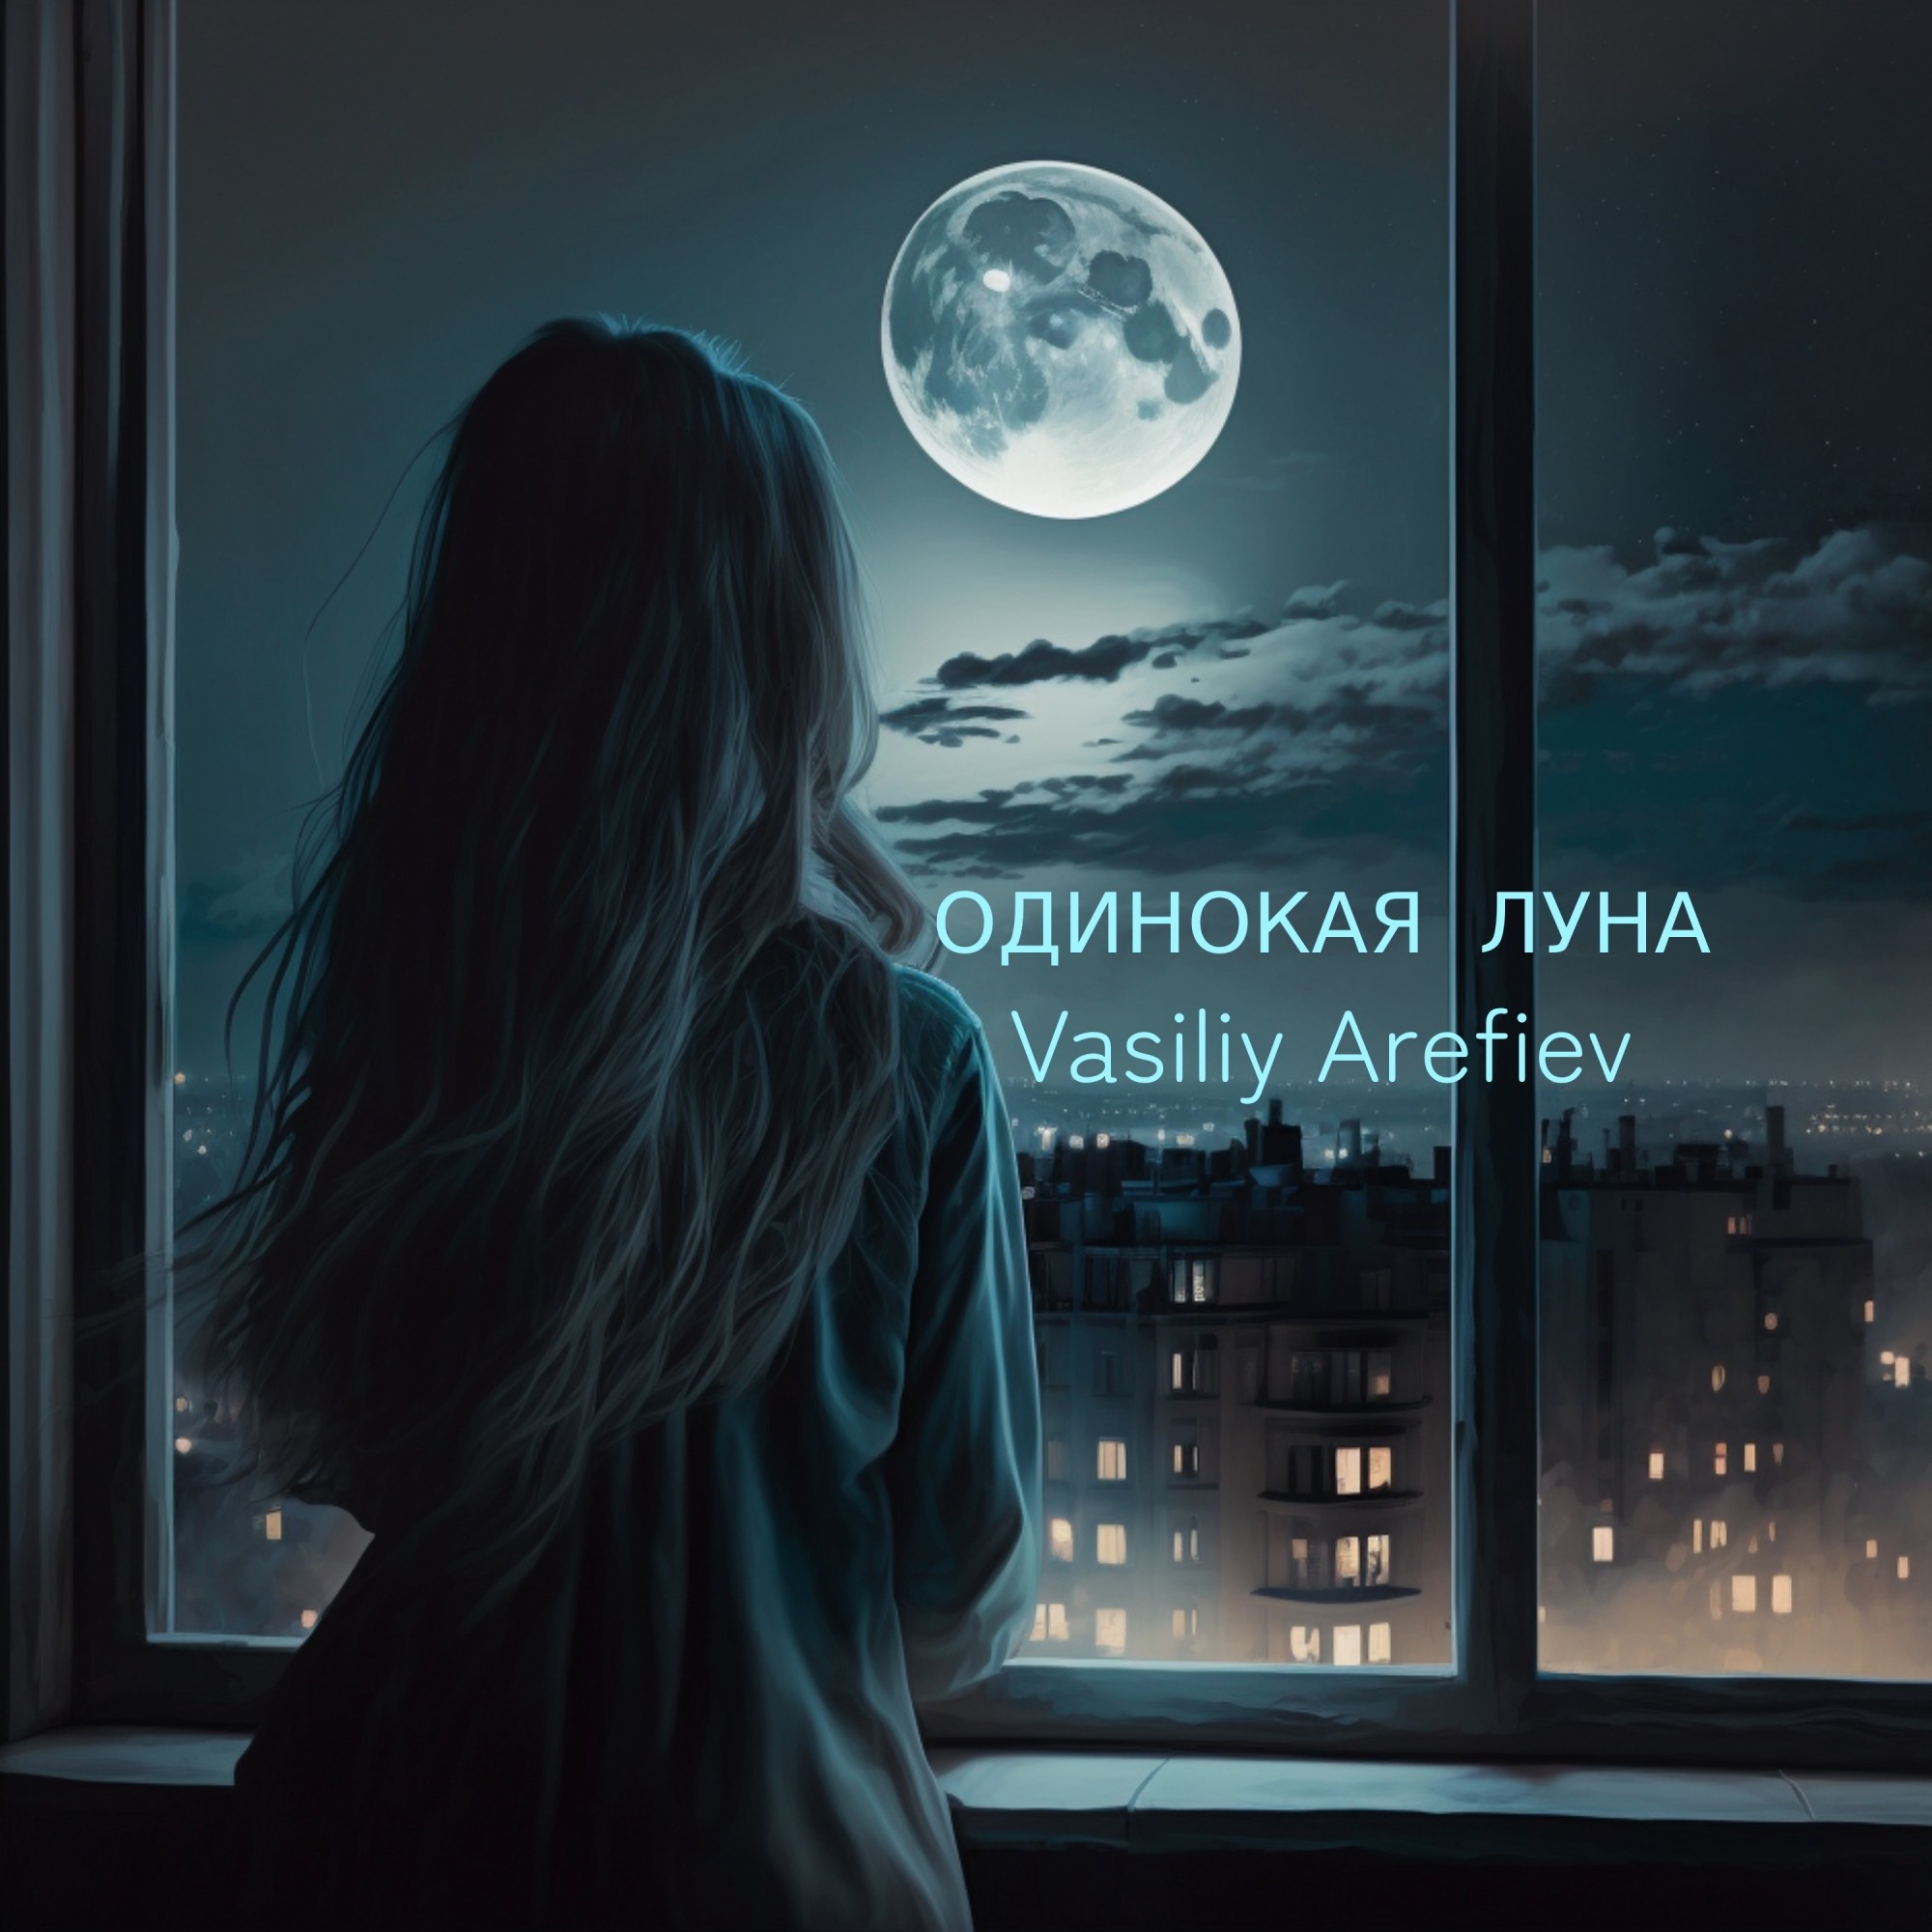 Одиночка Луна. Луна одиночество. Лунное одиночество. Одинокая Луна песня. Песня одинокая луна почему я одна